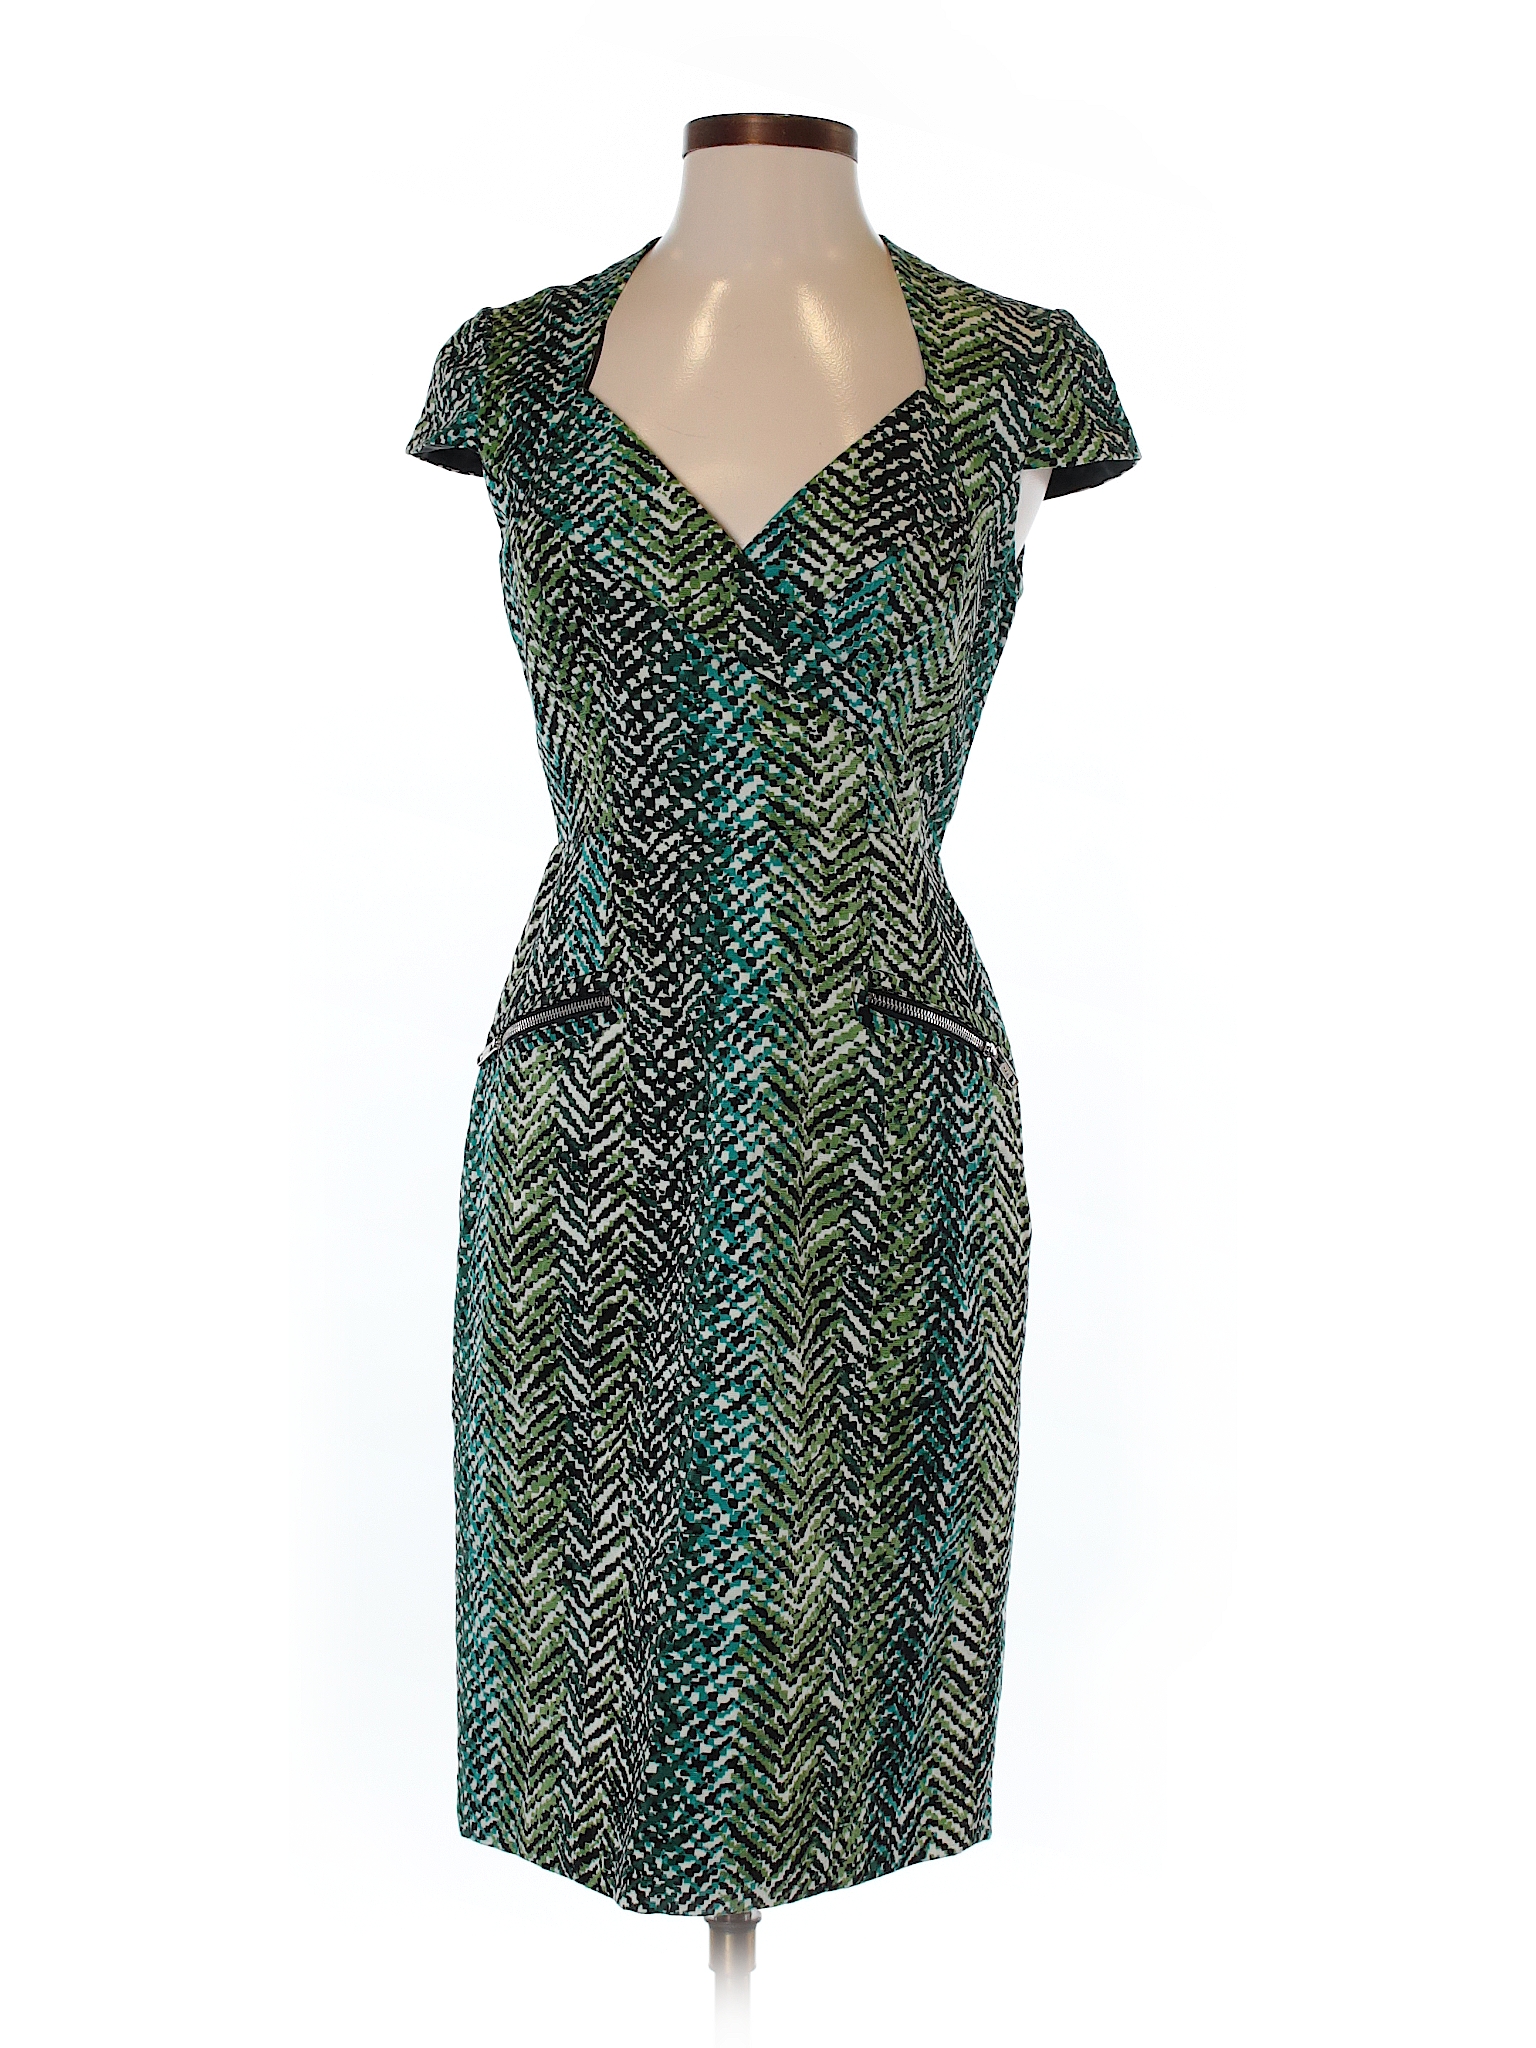 Jax 100% Cotton Chevron Herringbone Green Casual Dress Size 4 - 84% off ...